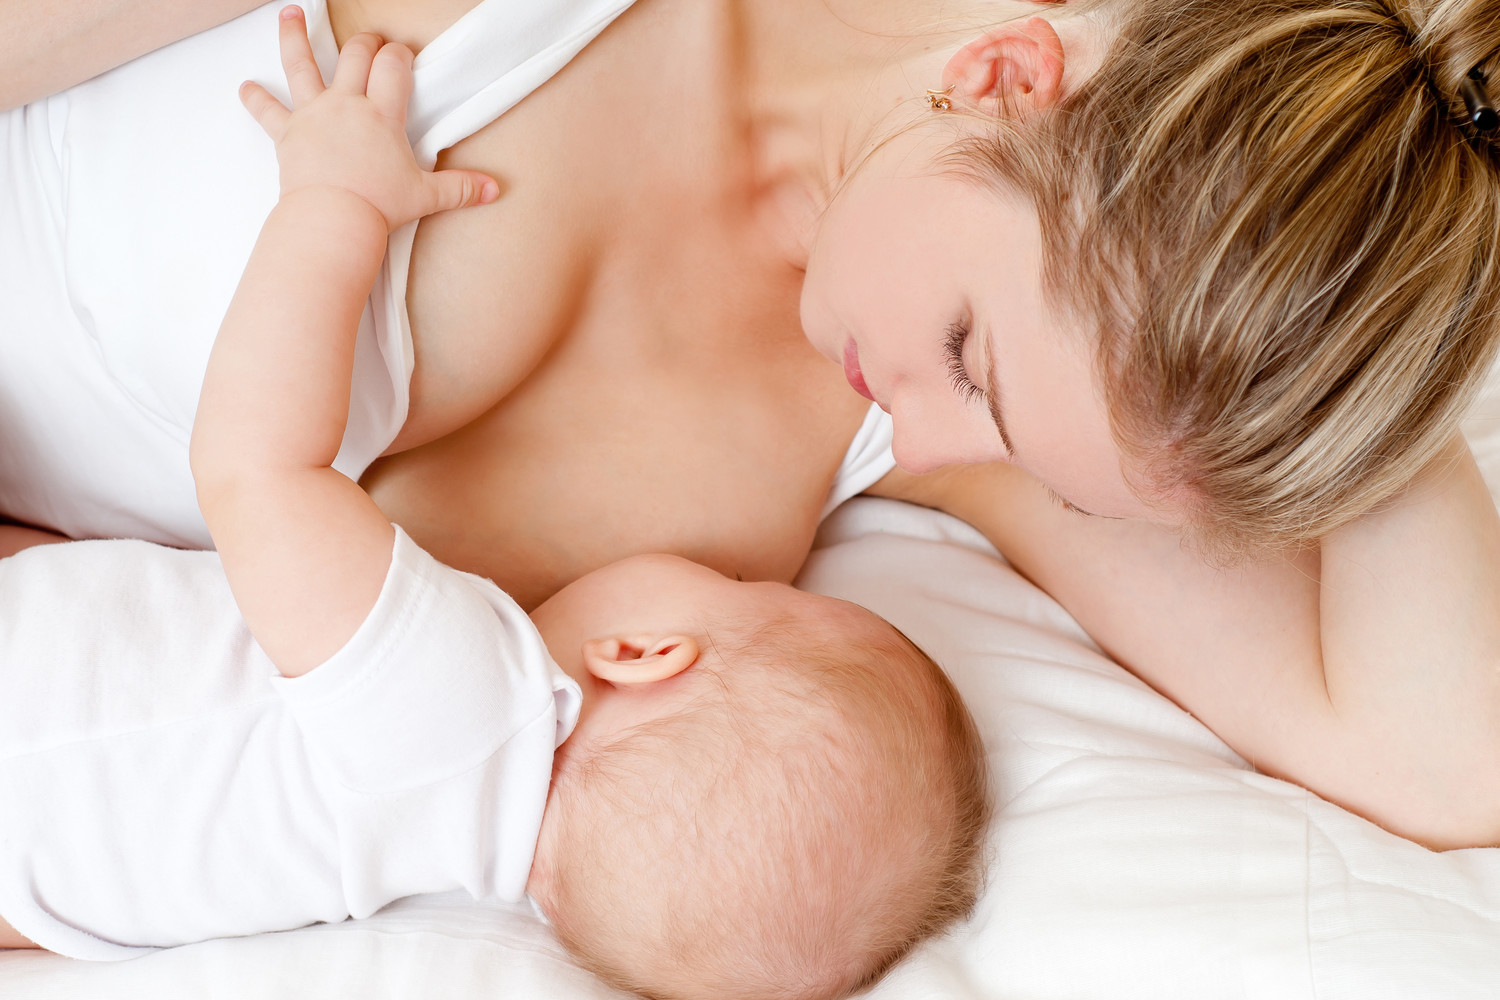 Breast-feeding, Breast milk, Childs development, Child care, New moms, New mothers, Lifestyle news, Health news